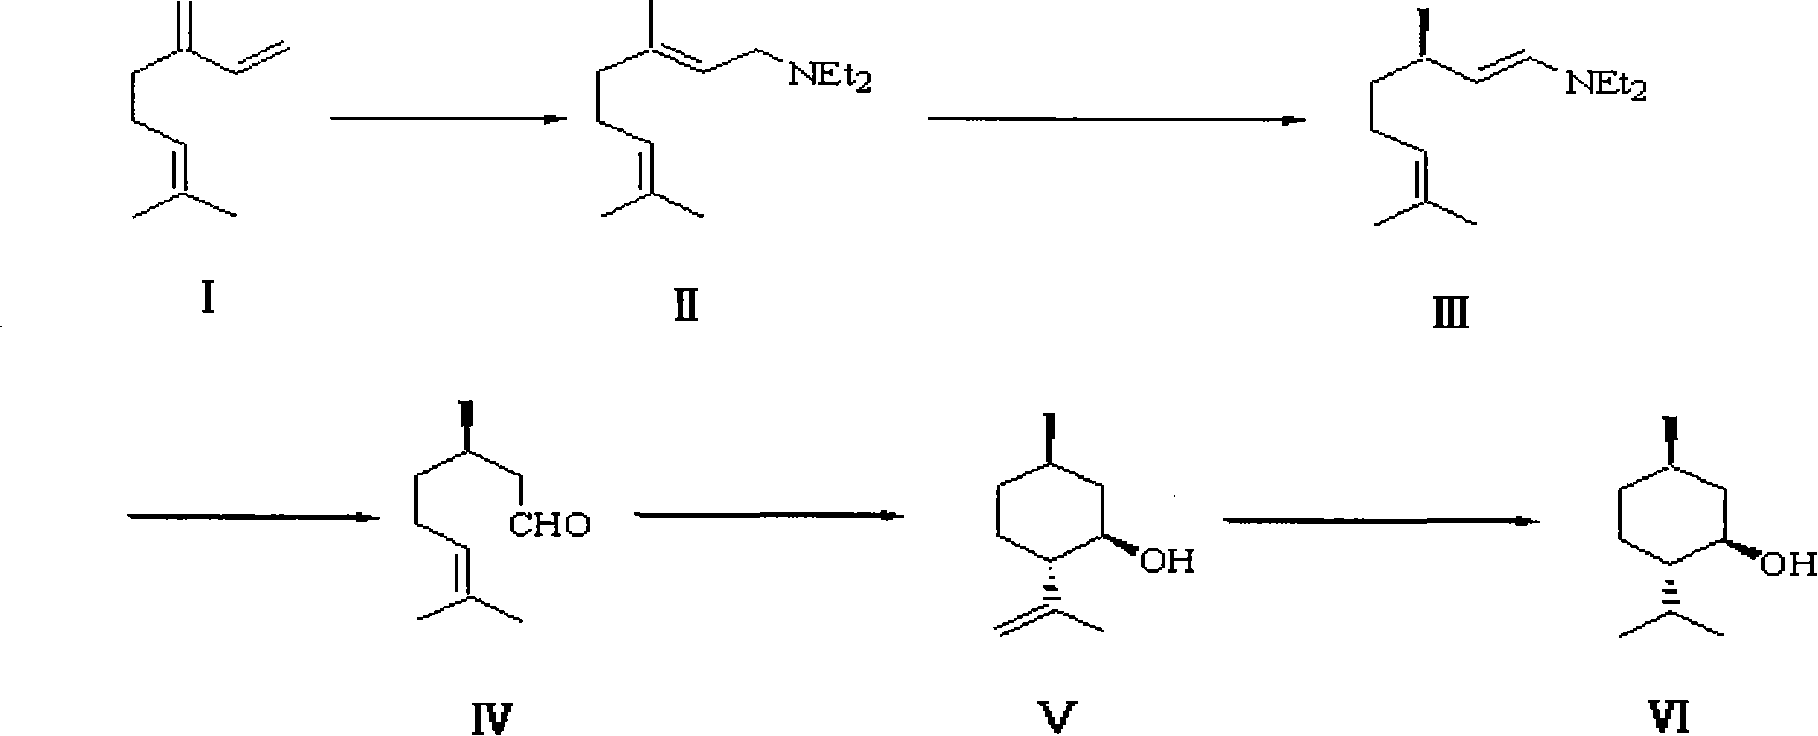 Method for synthesizing L-menthol